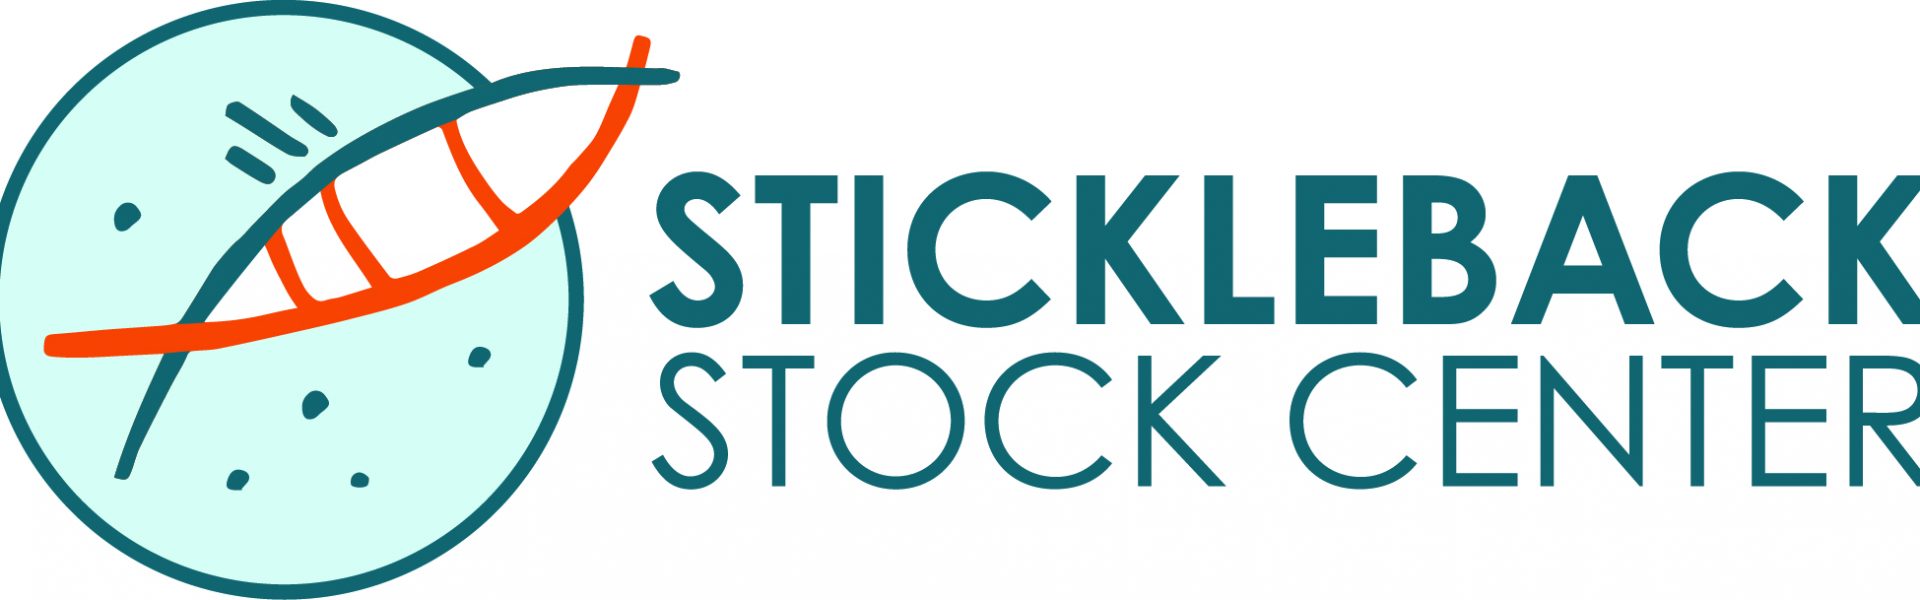 Stickleback Stock Center Logo and Link to the website